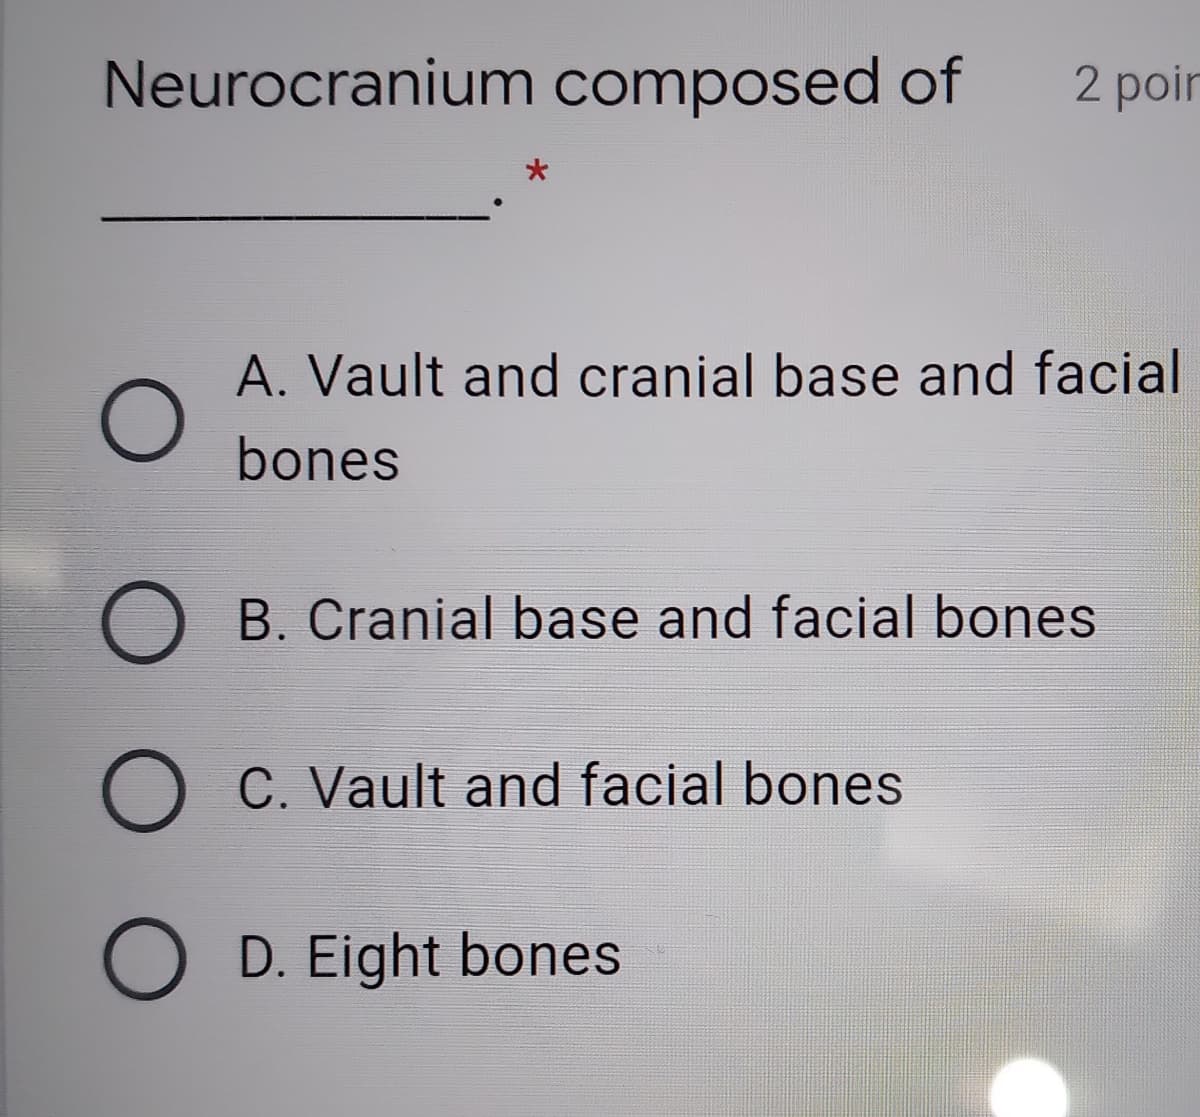 Neurocranium composed of
2 poir
A. Vault and cranial base and facial
bones
B. Cranial base and facial bones
O C. Vault and facial bones
D. Eight bones
